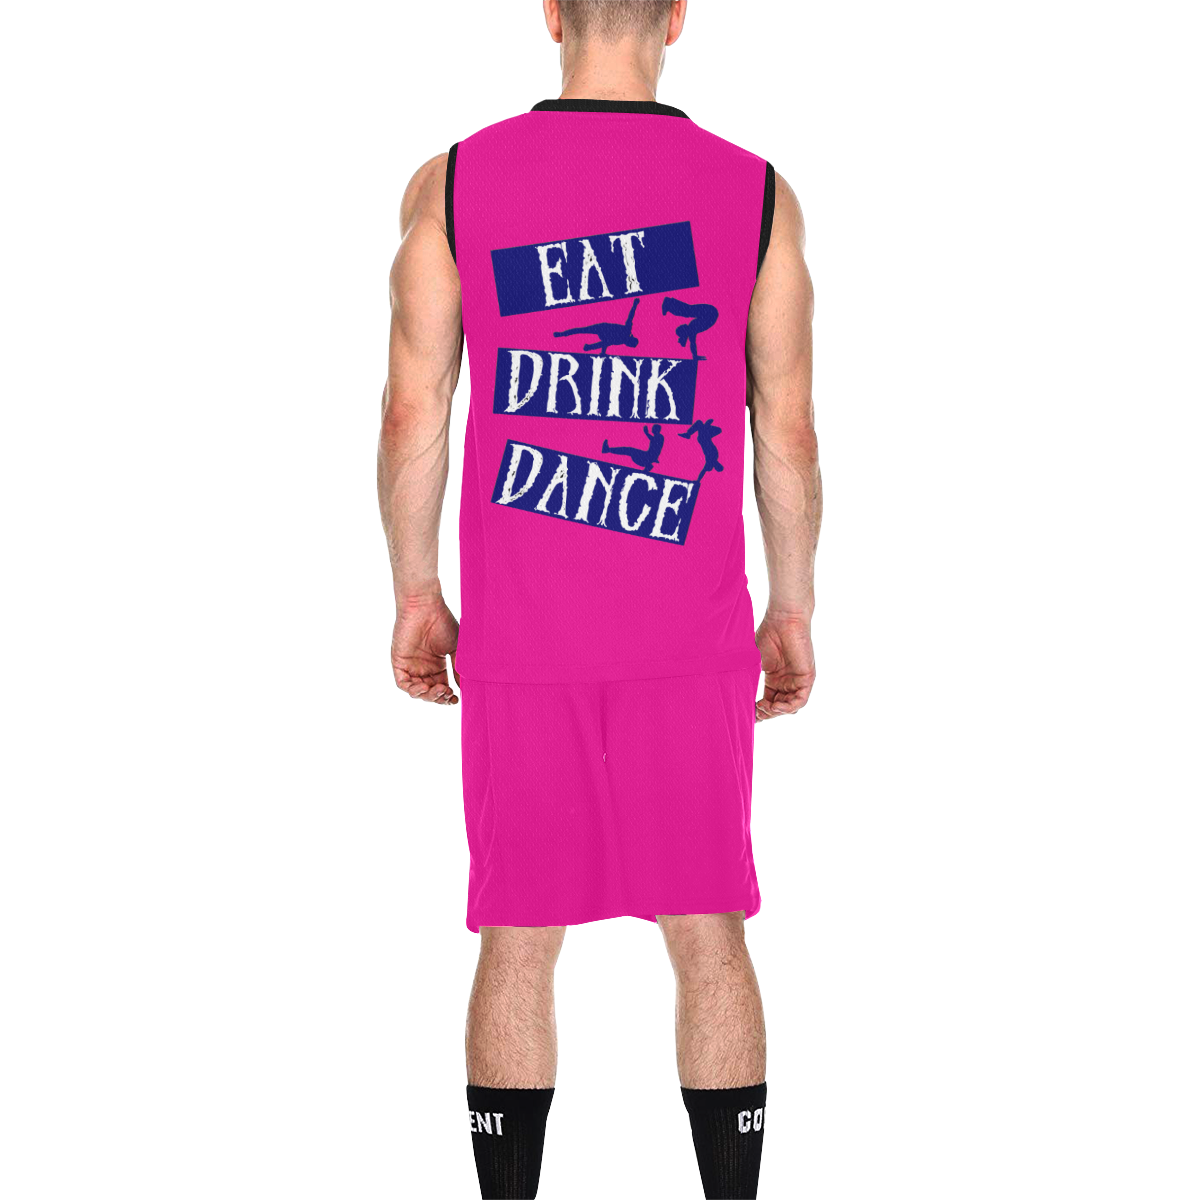 Break Dancing Blue / Pink All Over Print Basketball Uniform